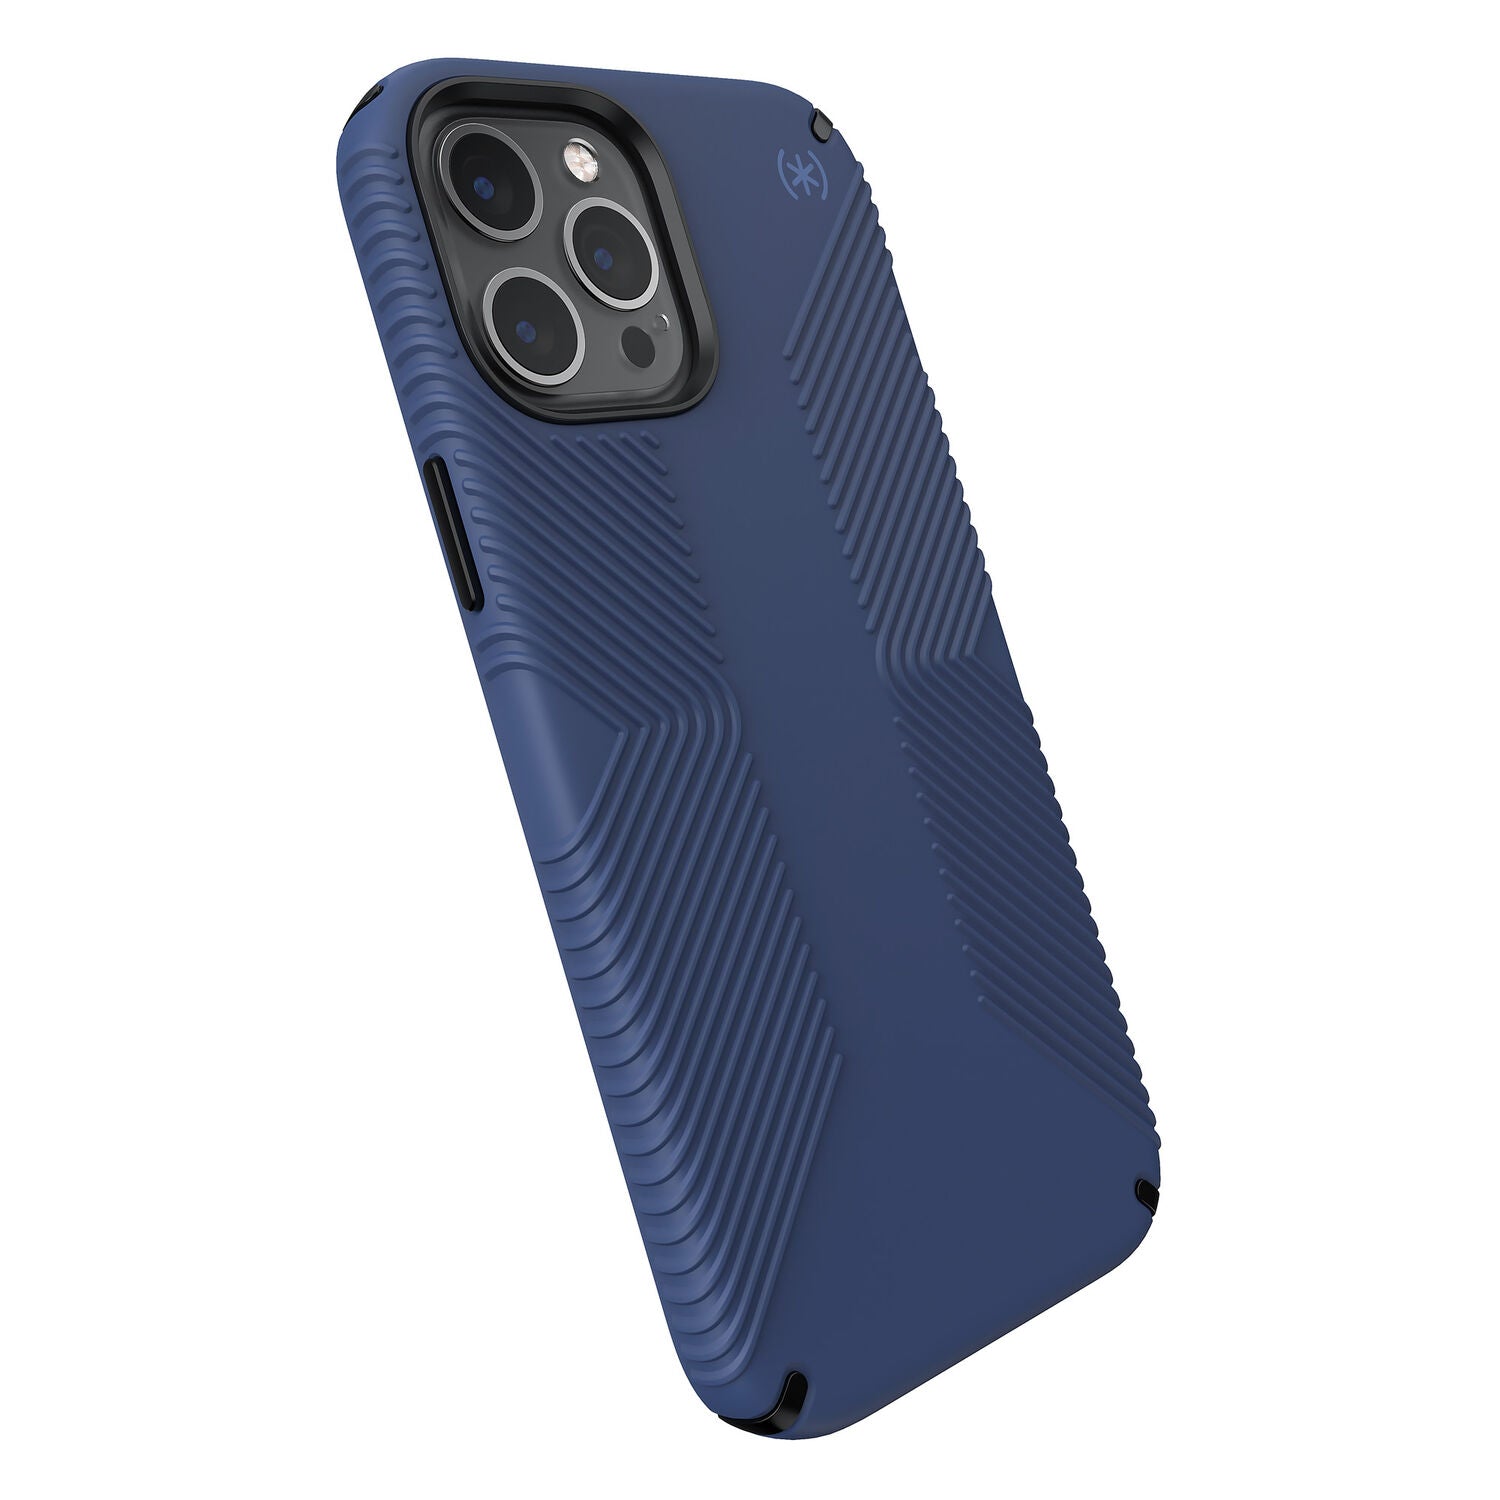 Speck Presidio2 Grip Case for iPhone 12 Pro Max